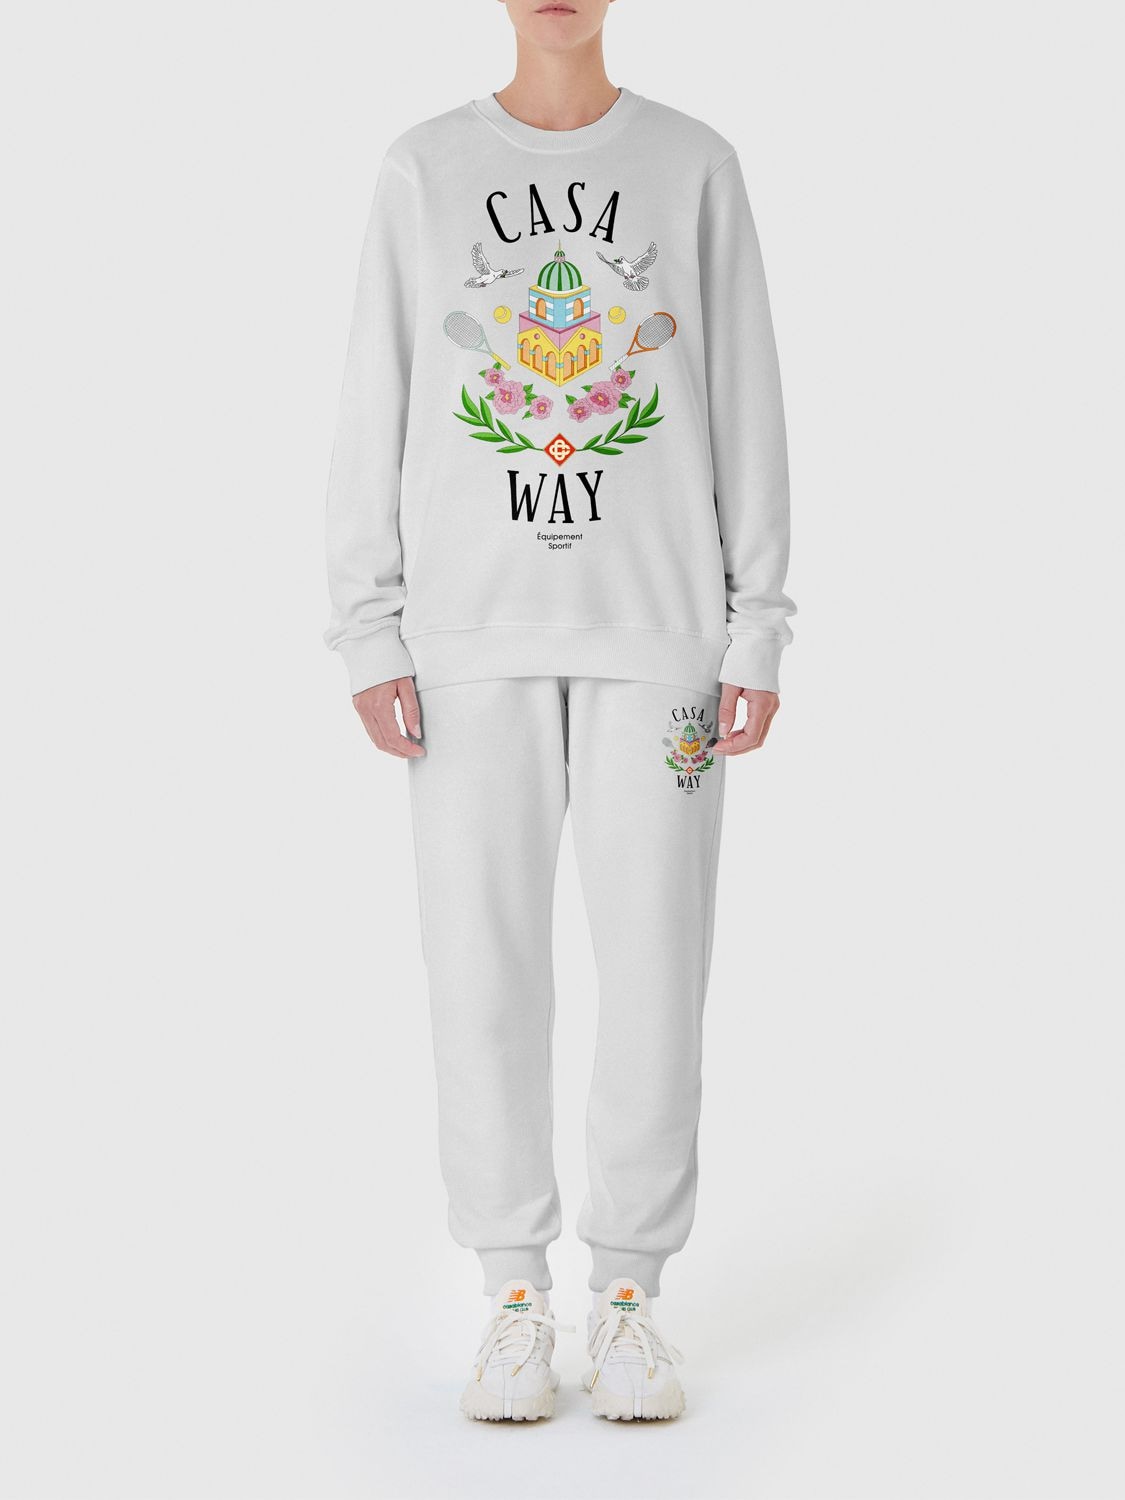 Image of Casa Way Embroidered Jersey Sweatshirt